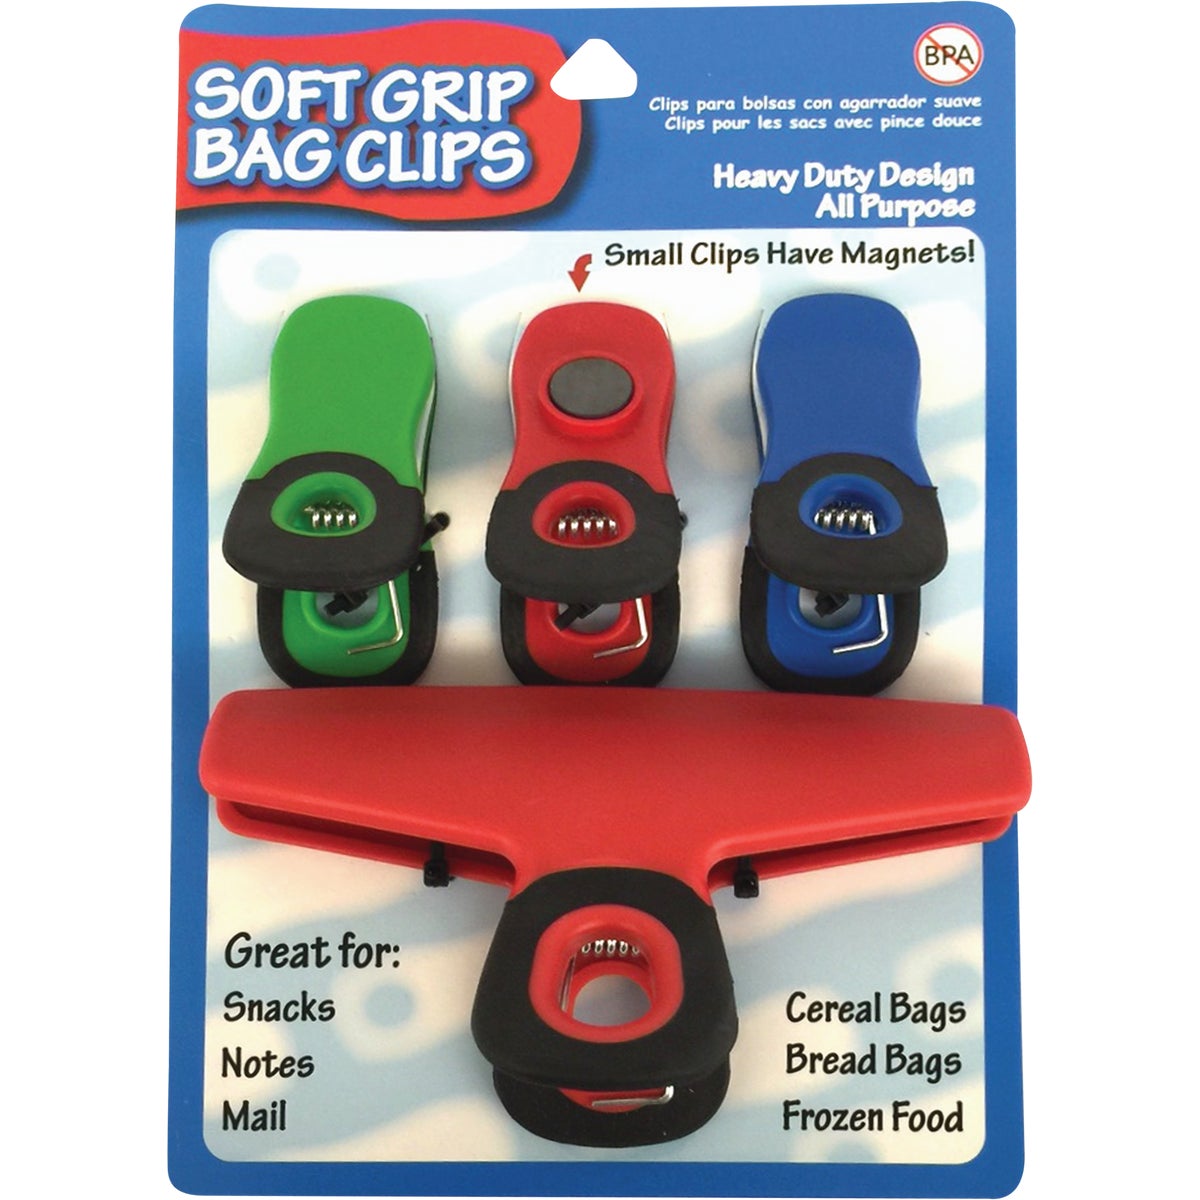 Item 970056, Assorted size, 4-count, soft grip bag clip set.